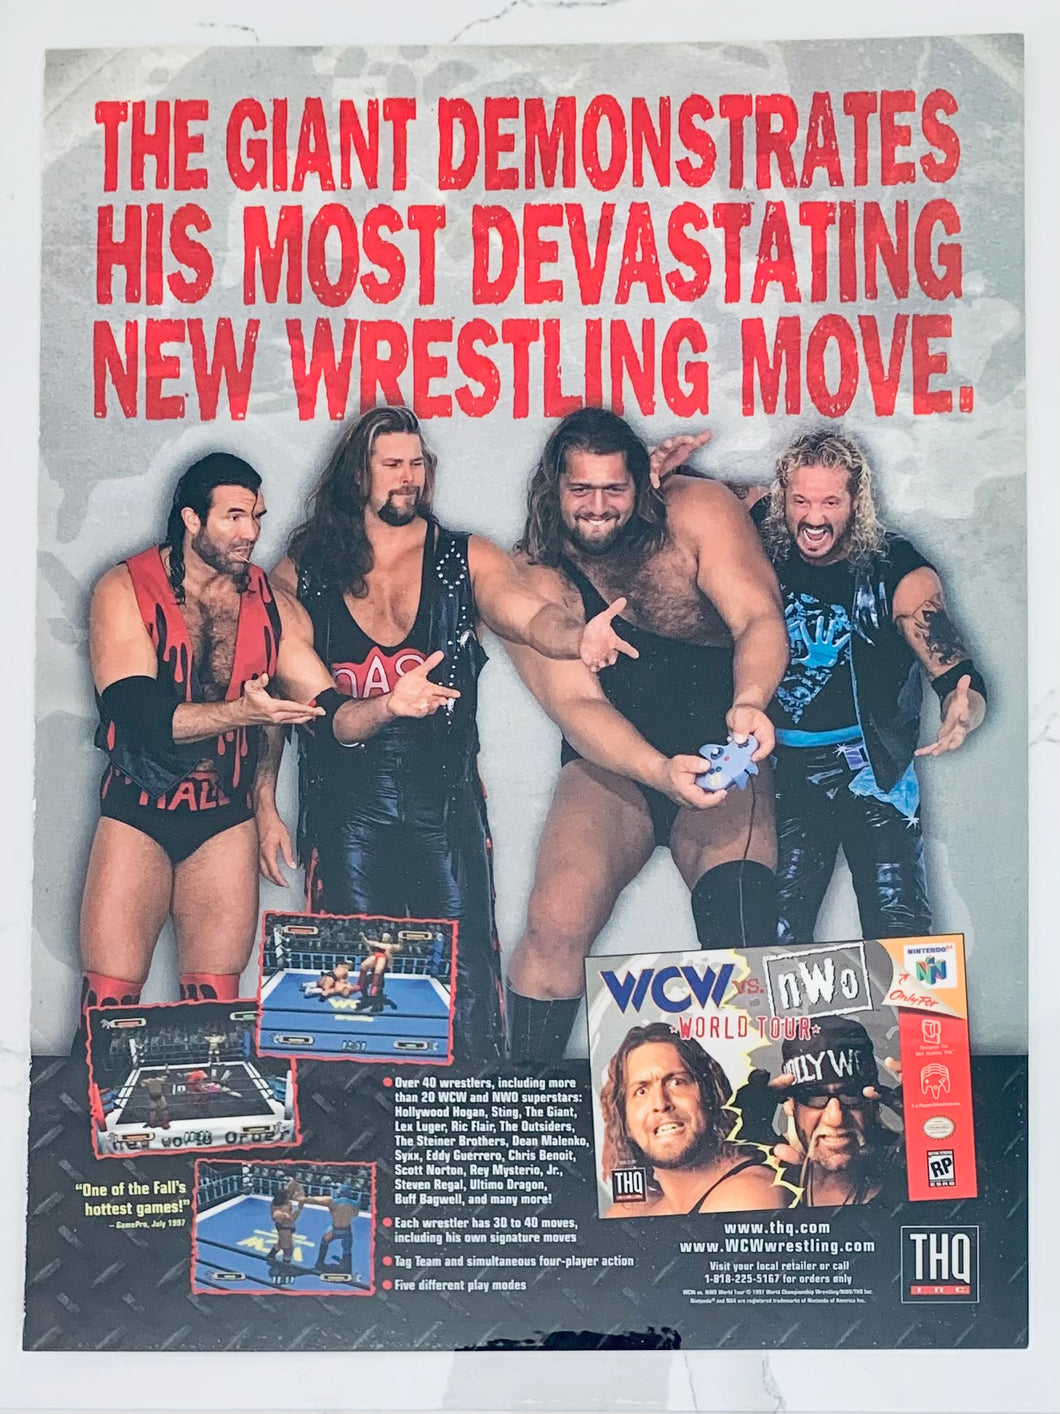 WCW vs. NWO World Tour - N64 - Original Vintage Advertisement - Print Ads - Laminated A4 Poster